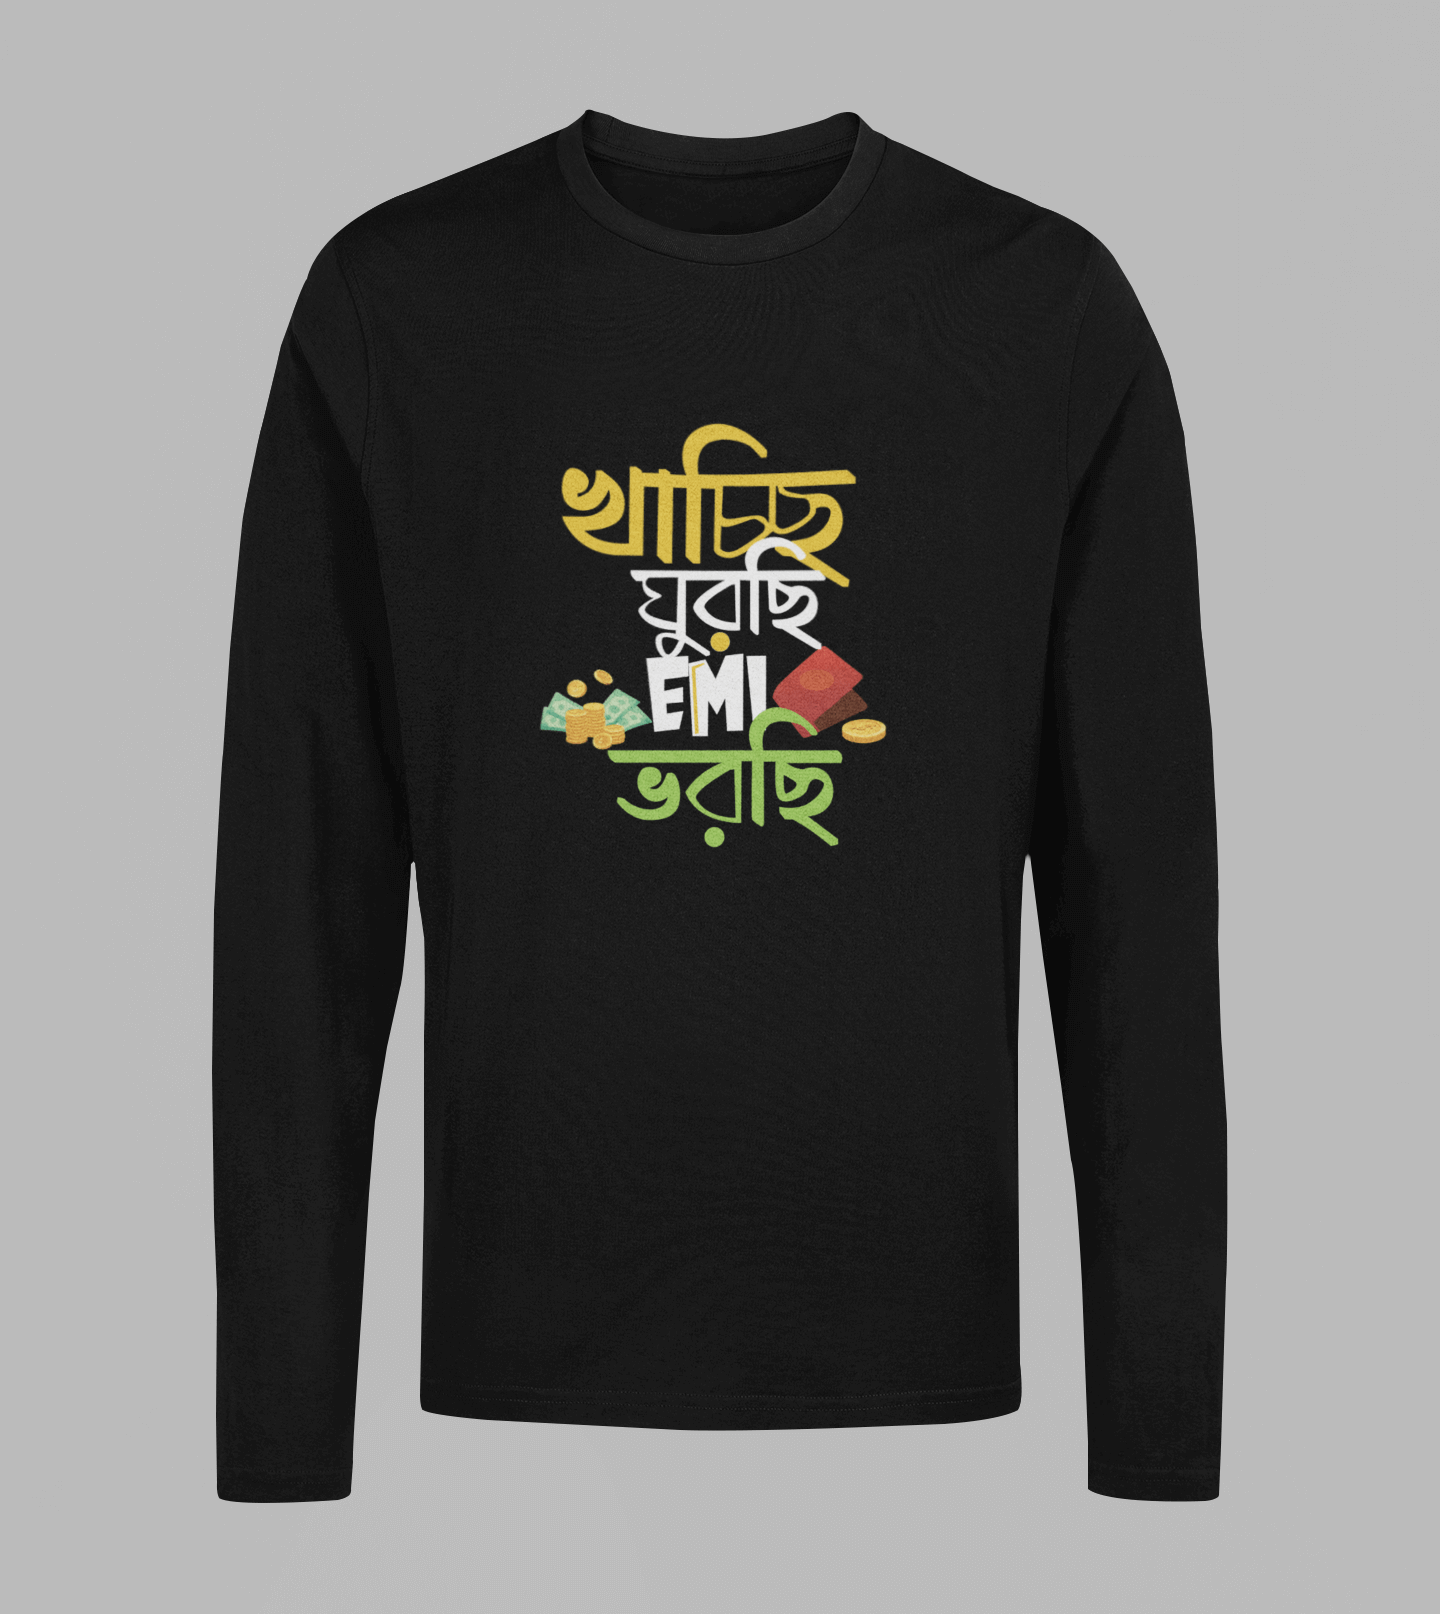 Full Sleeve  Bengali Graphic T-shirt "Kachii ghurchi EMI bhorchi"